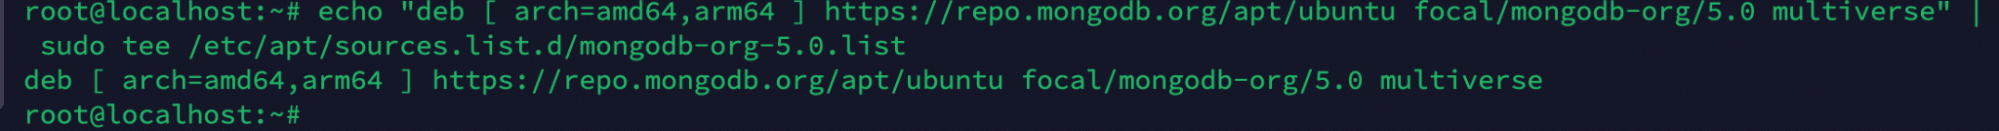 Step 3 to install mongoDB on ubuntu